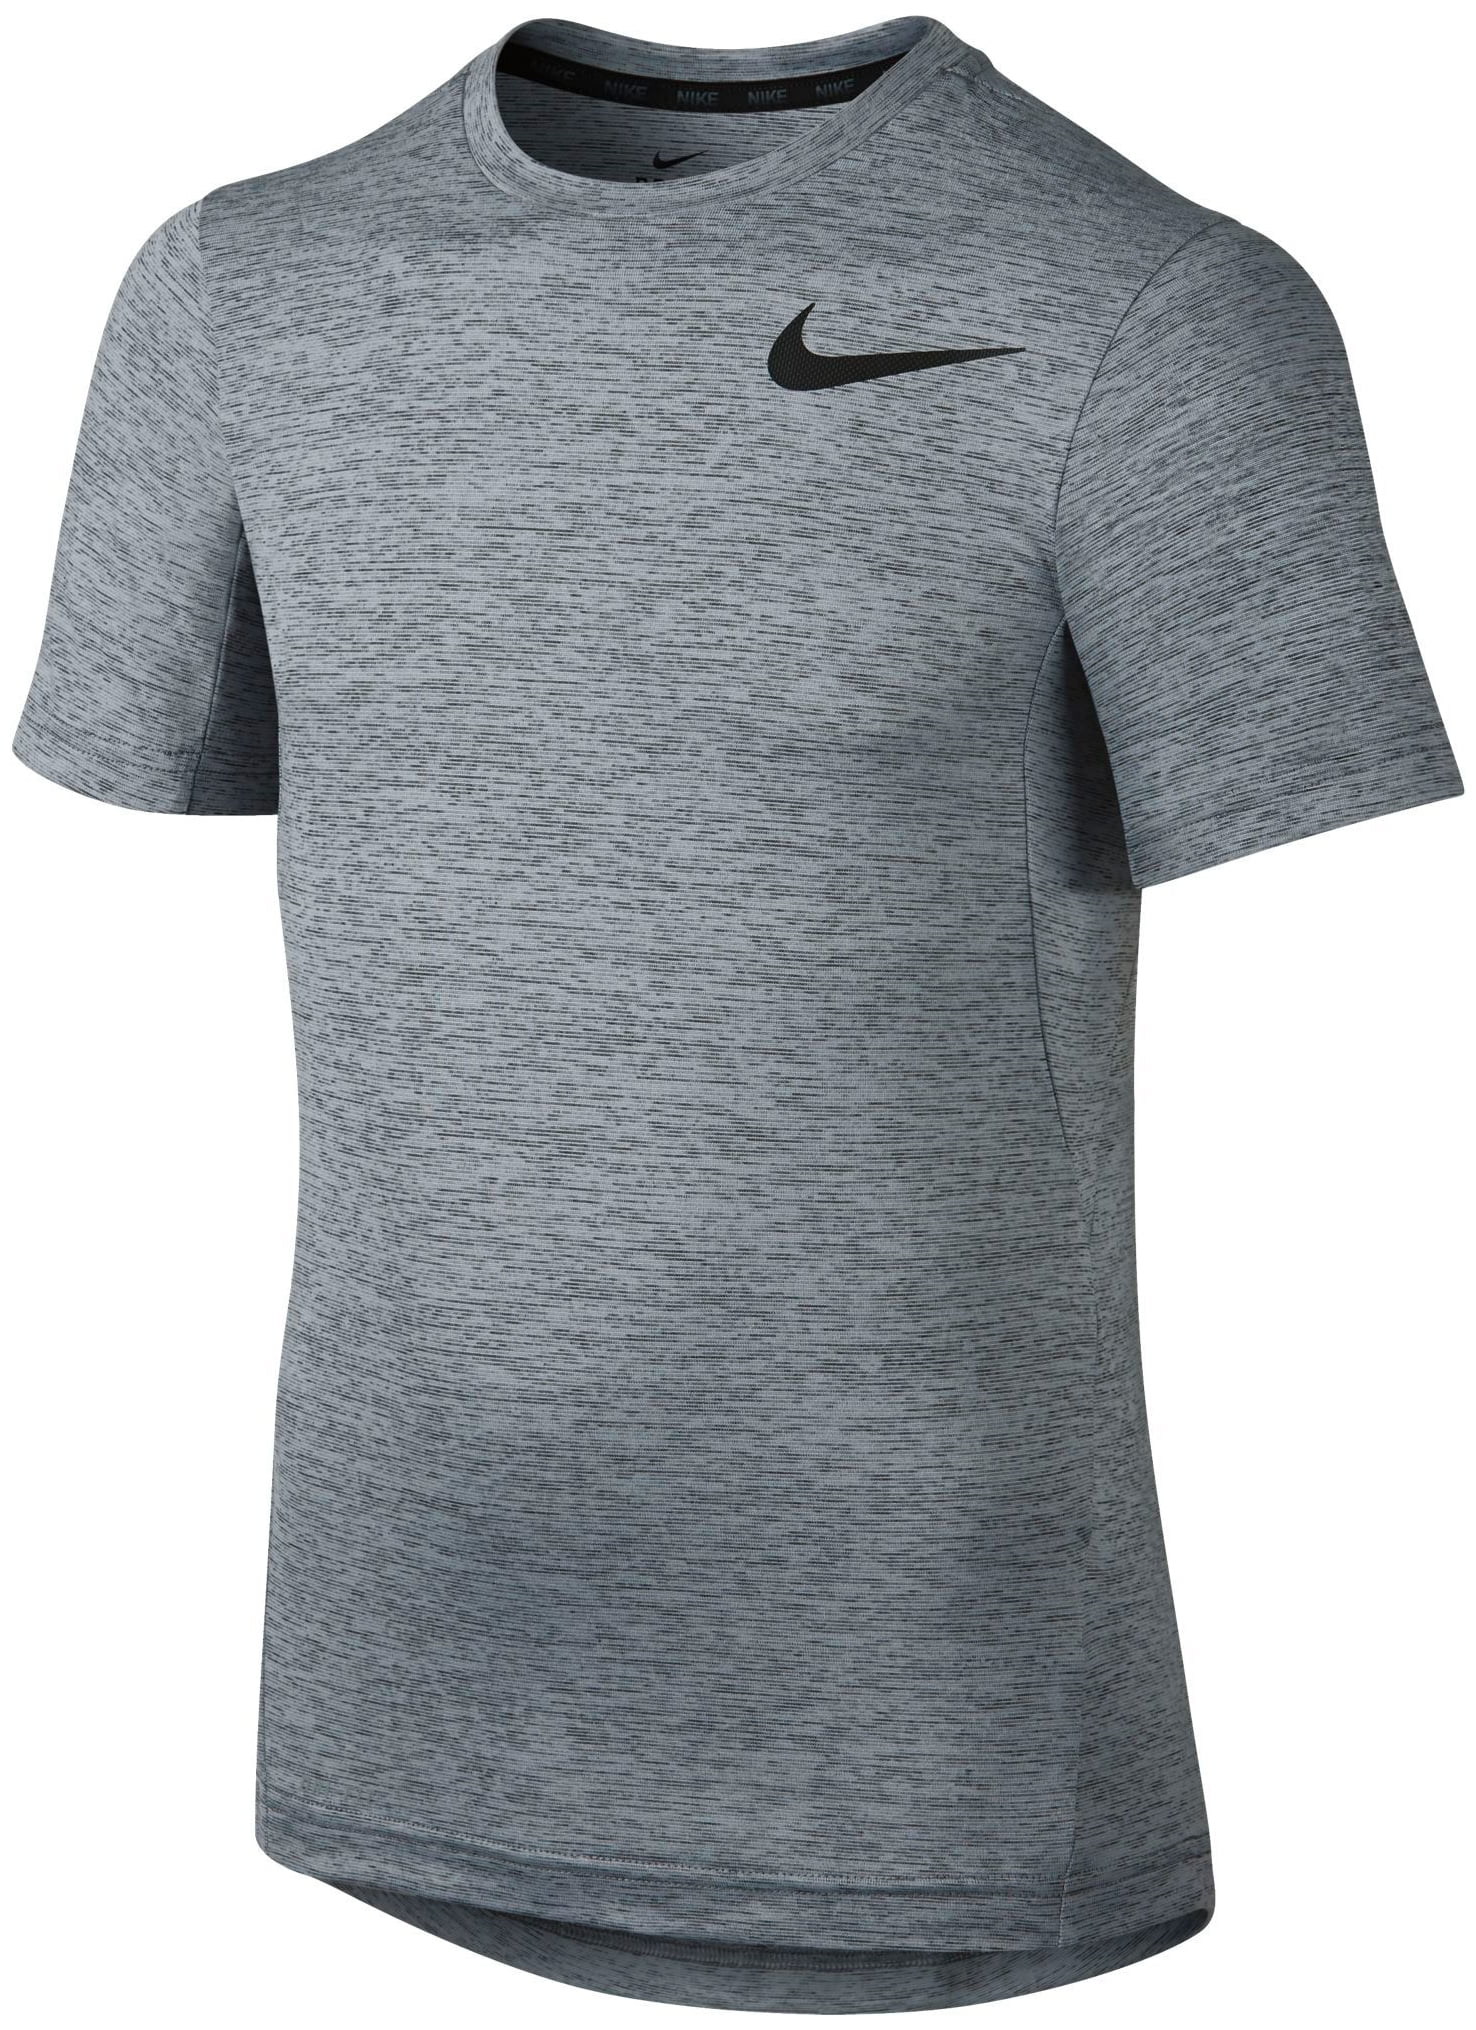 Nike Boys' Dri-FIT T-Shirt - Cool Grey/Wolf Grey/Black - Size XS ...